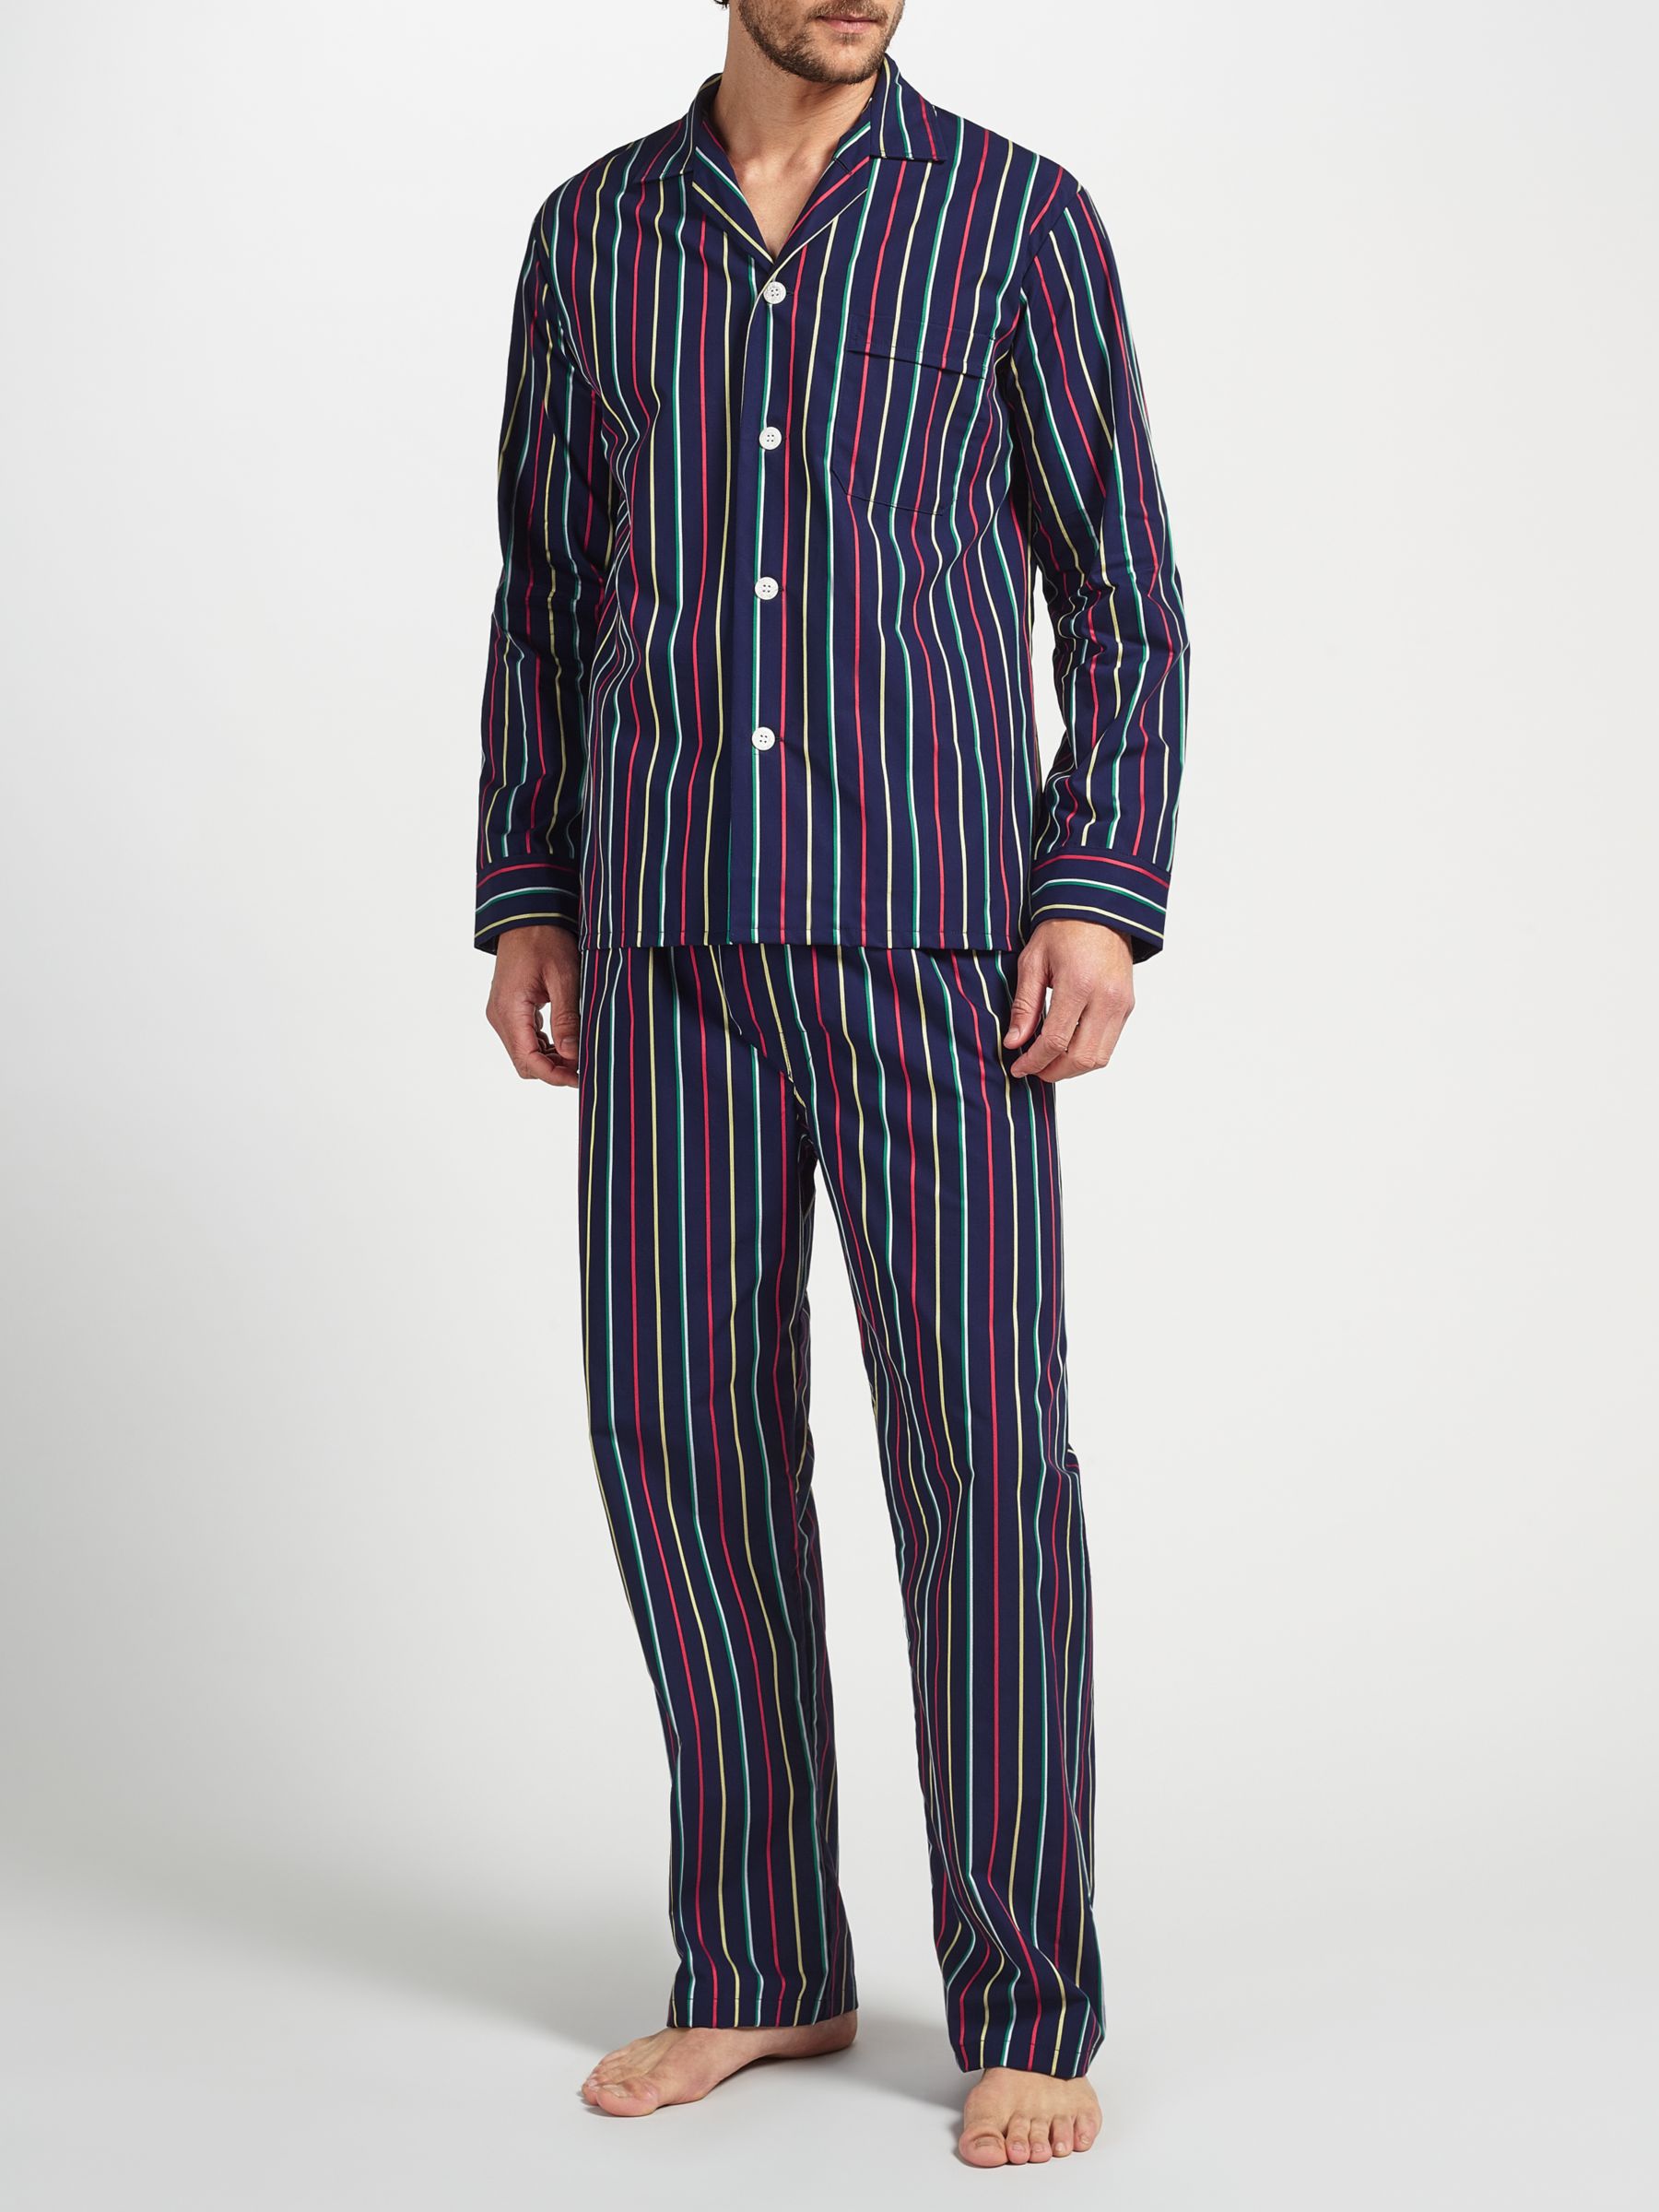 Derek Rose Multi Stripe Woven Cotton Pyjamas, Navy/Multi